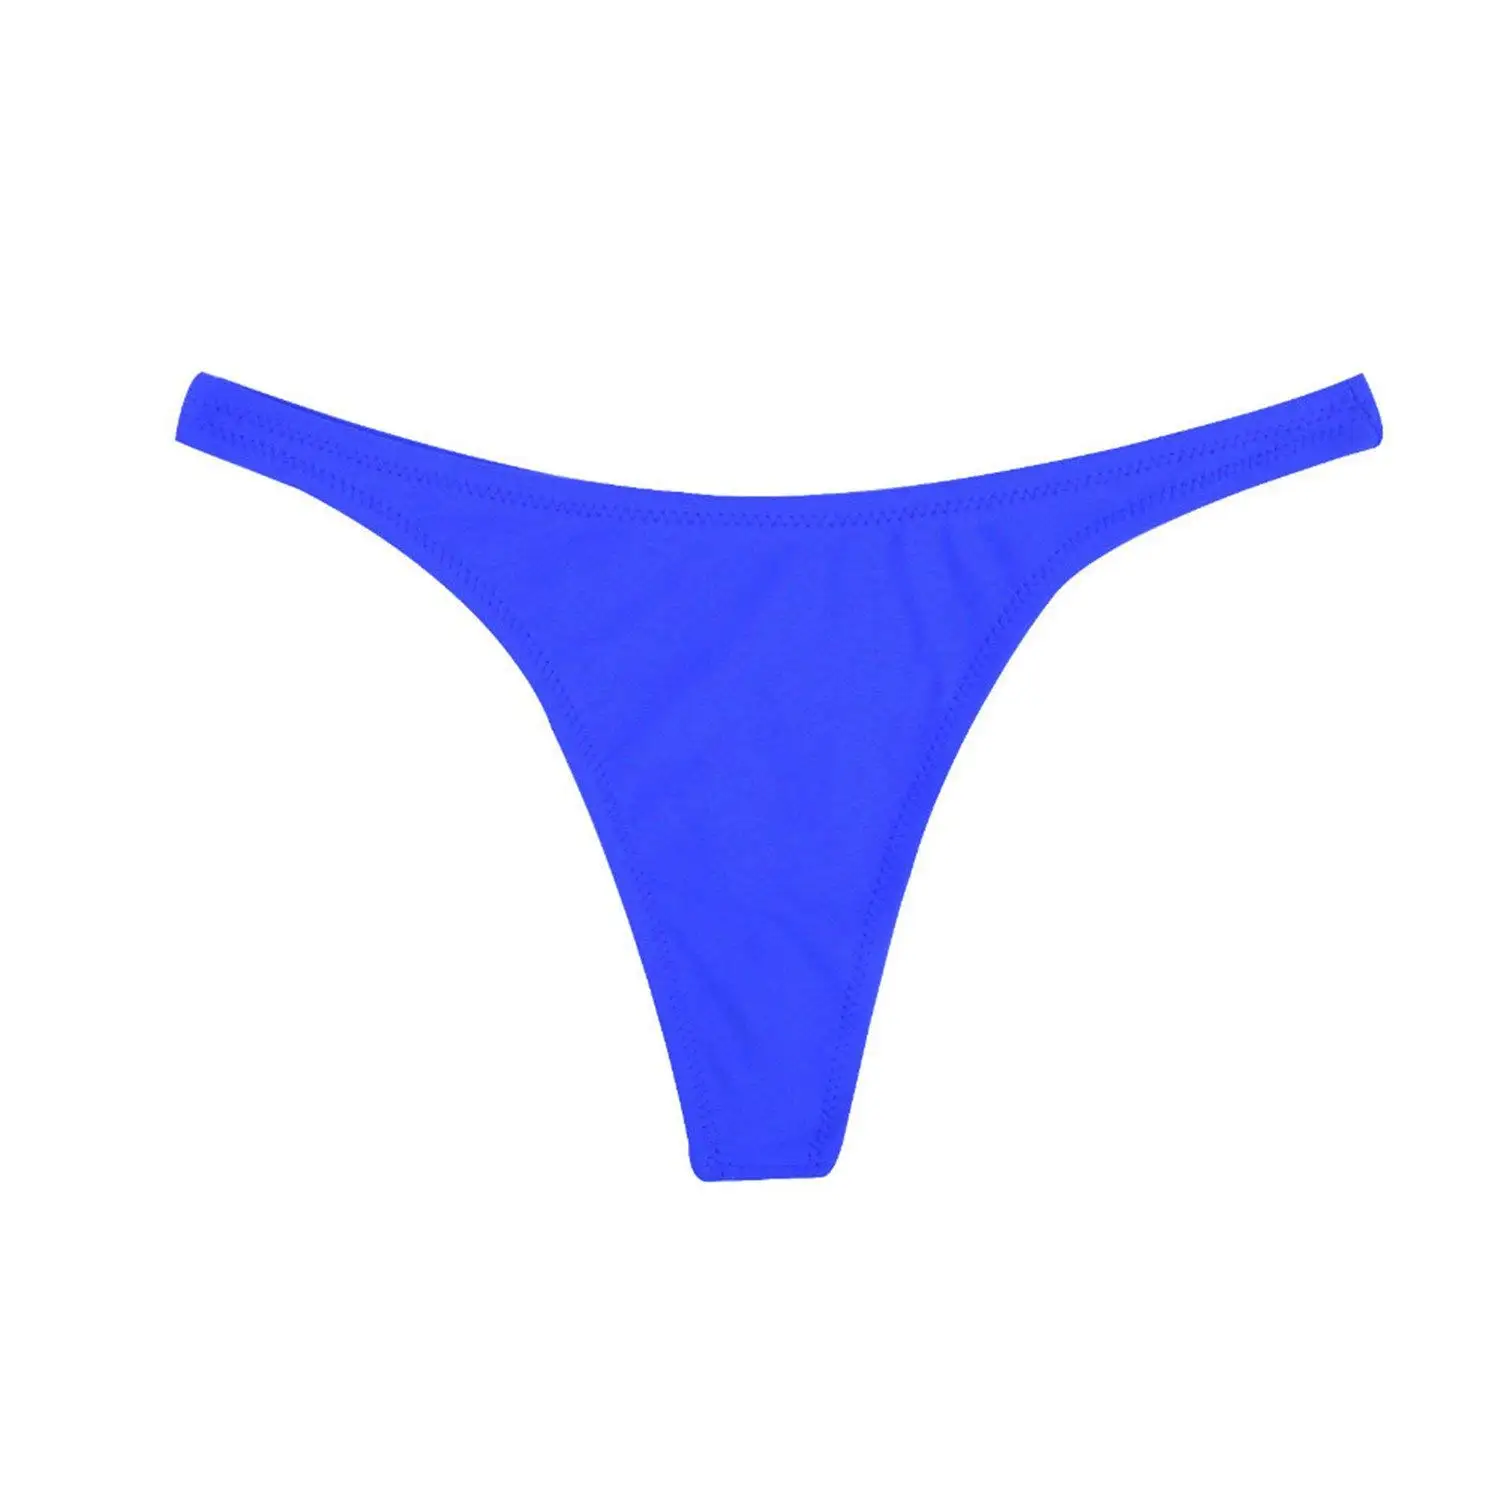 Cheap Micro Bikinis For Men Find Micro Bikinis For Men Deals On Line At Alibaba Com